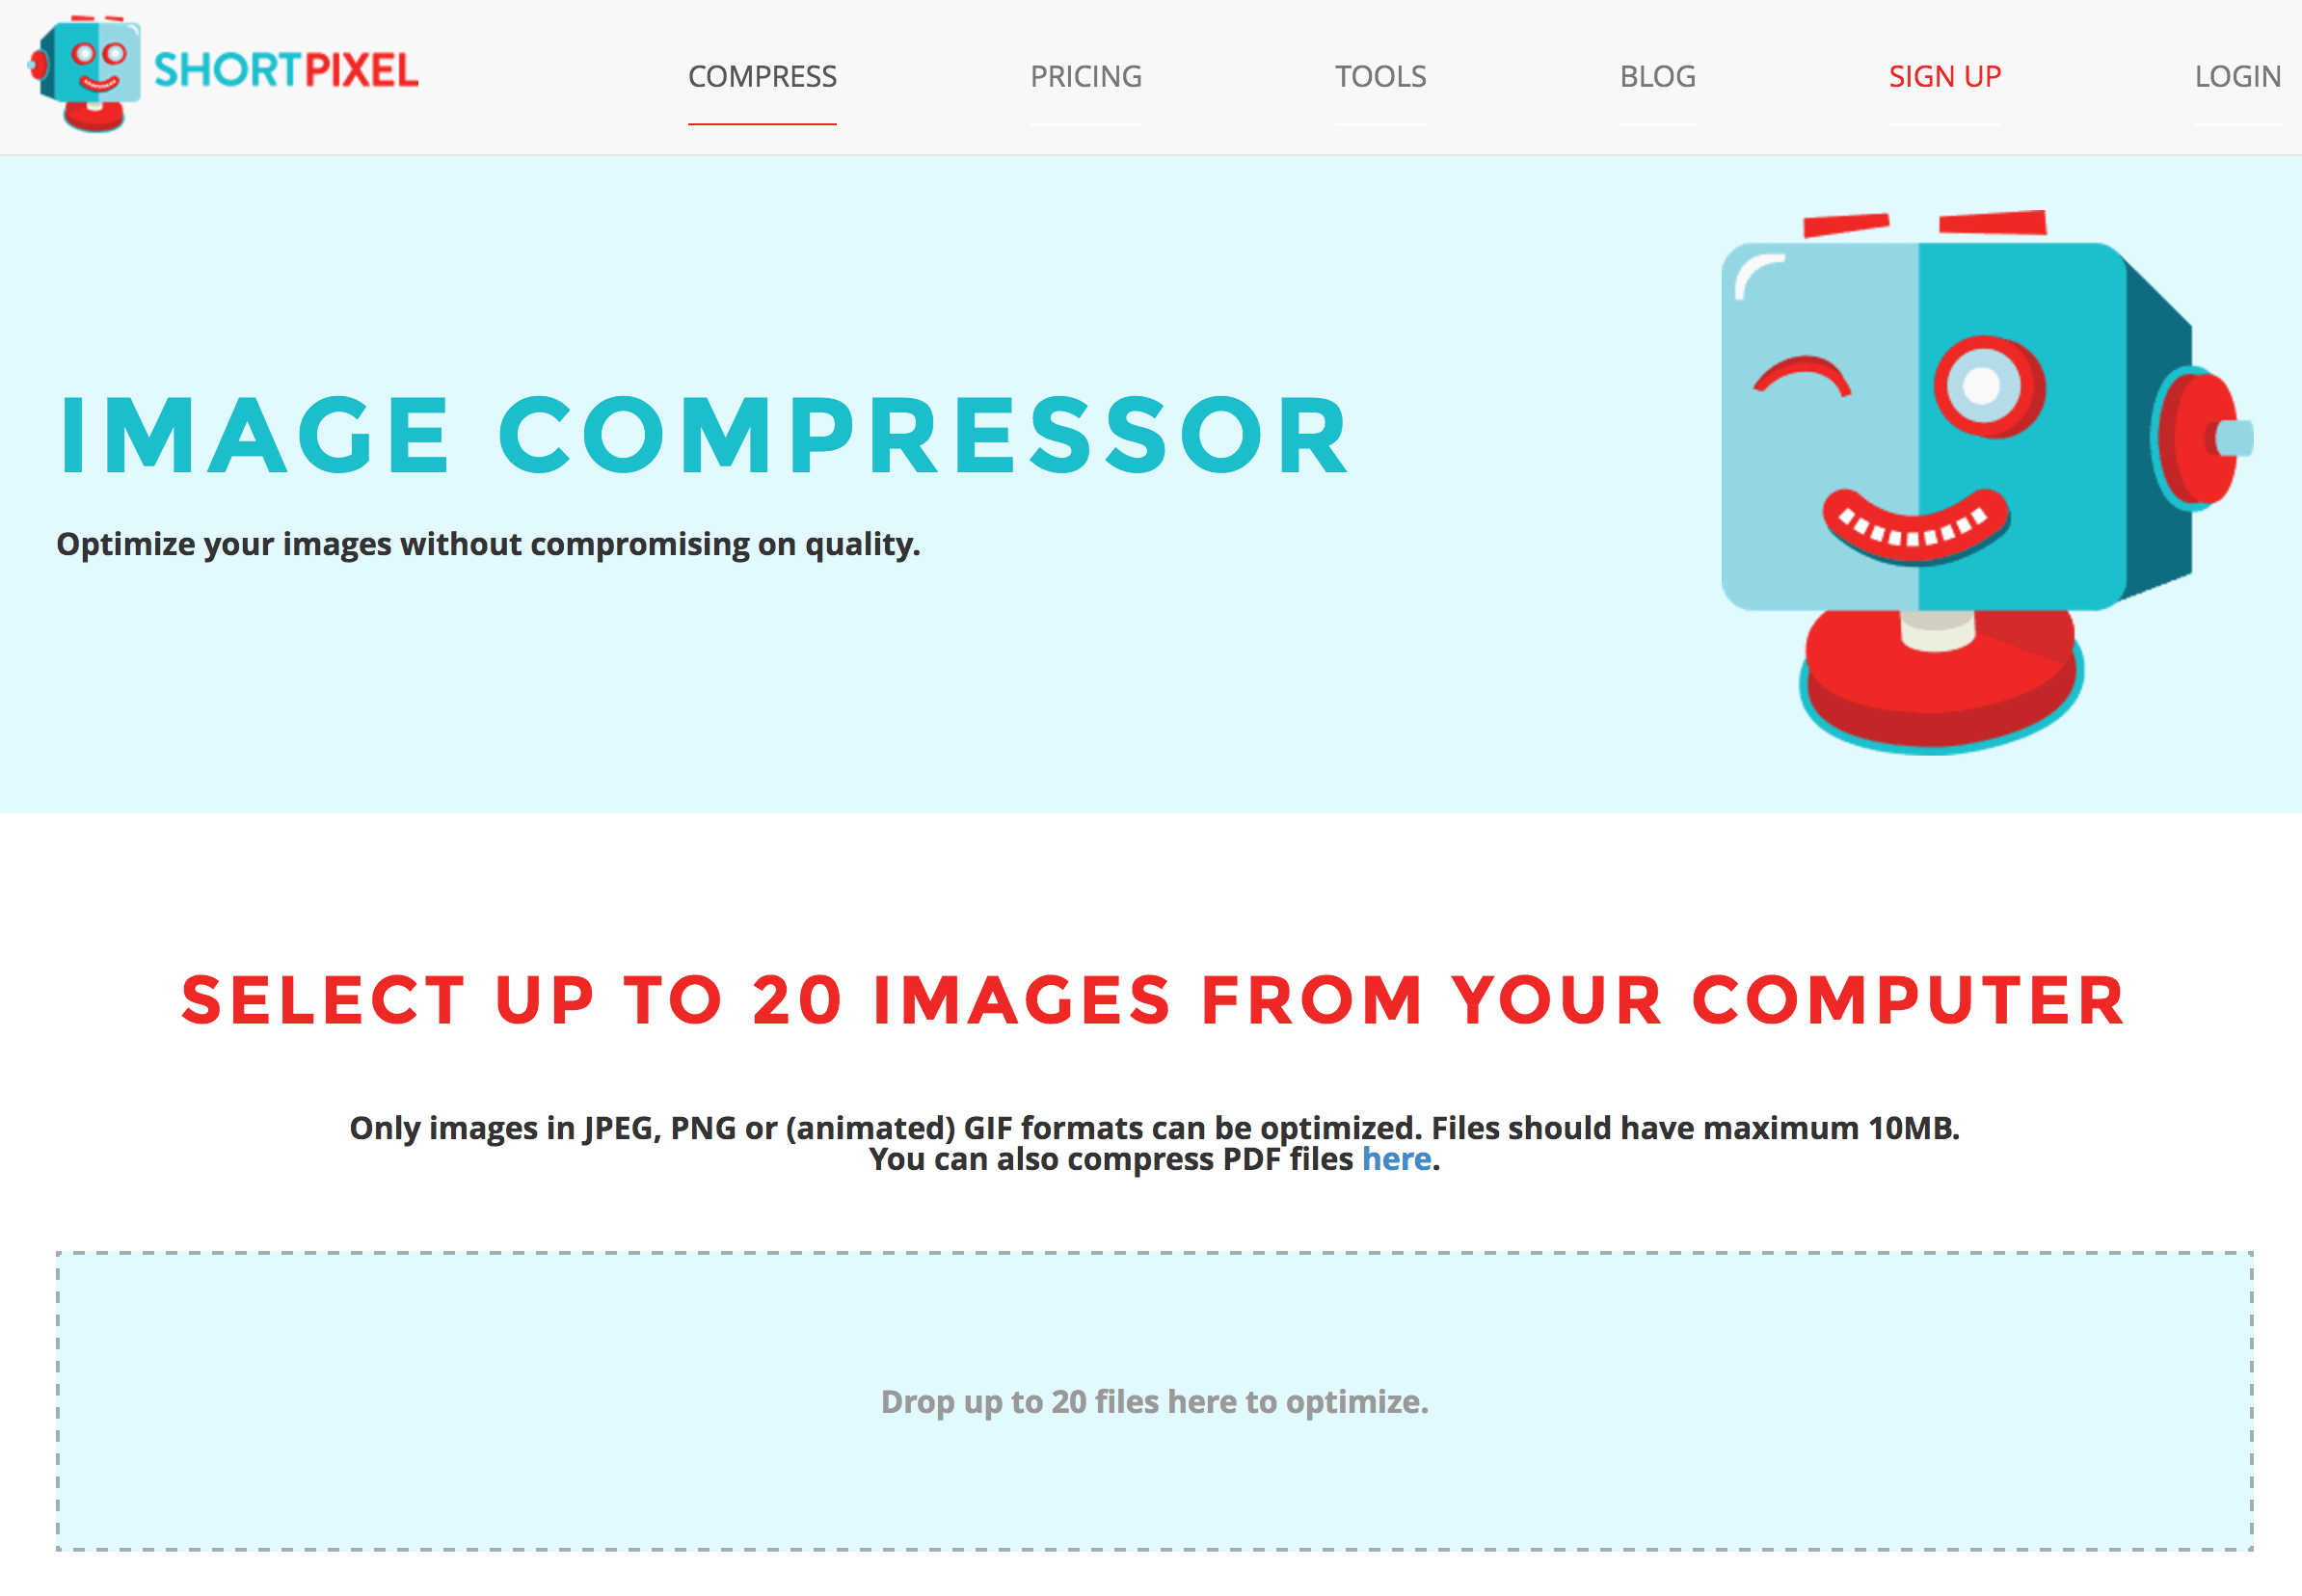 ShortPixel's free Image Compressor